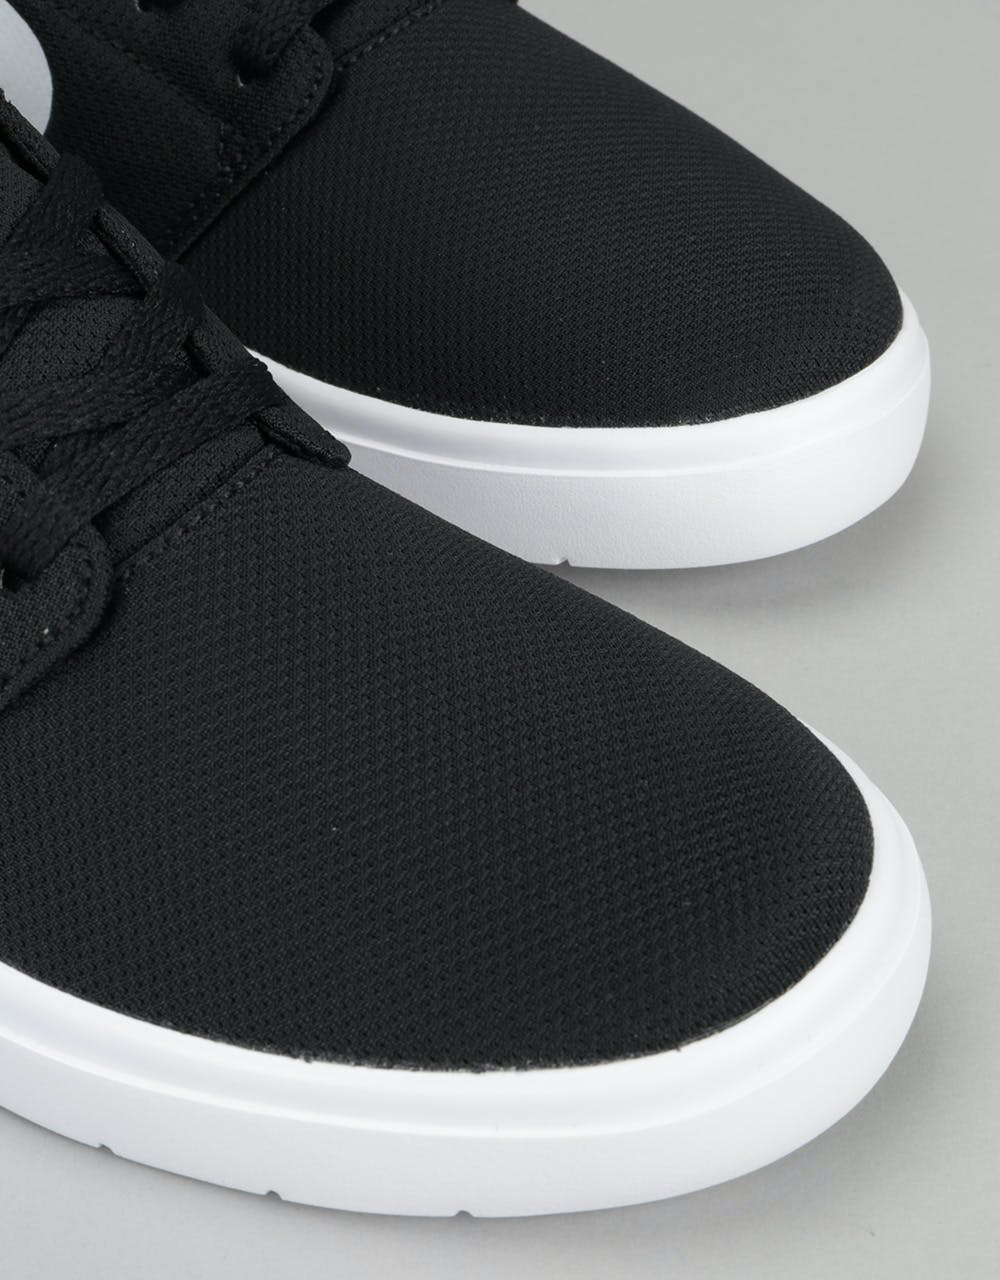 Nike SB Portmore II Ultralight Kids Skate Shoes - Black/White